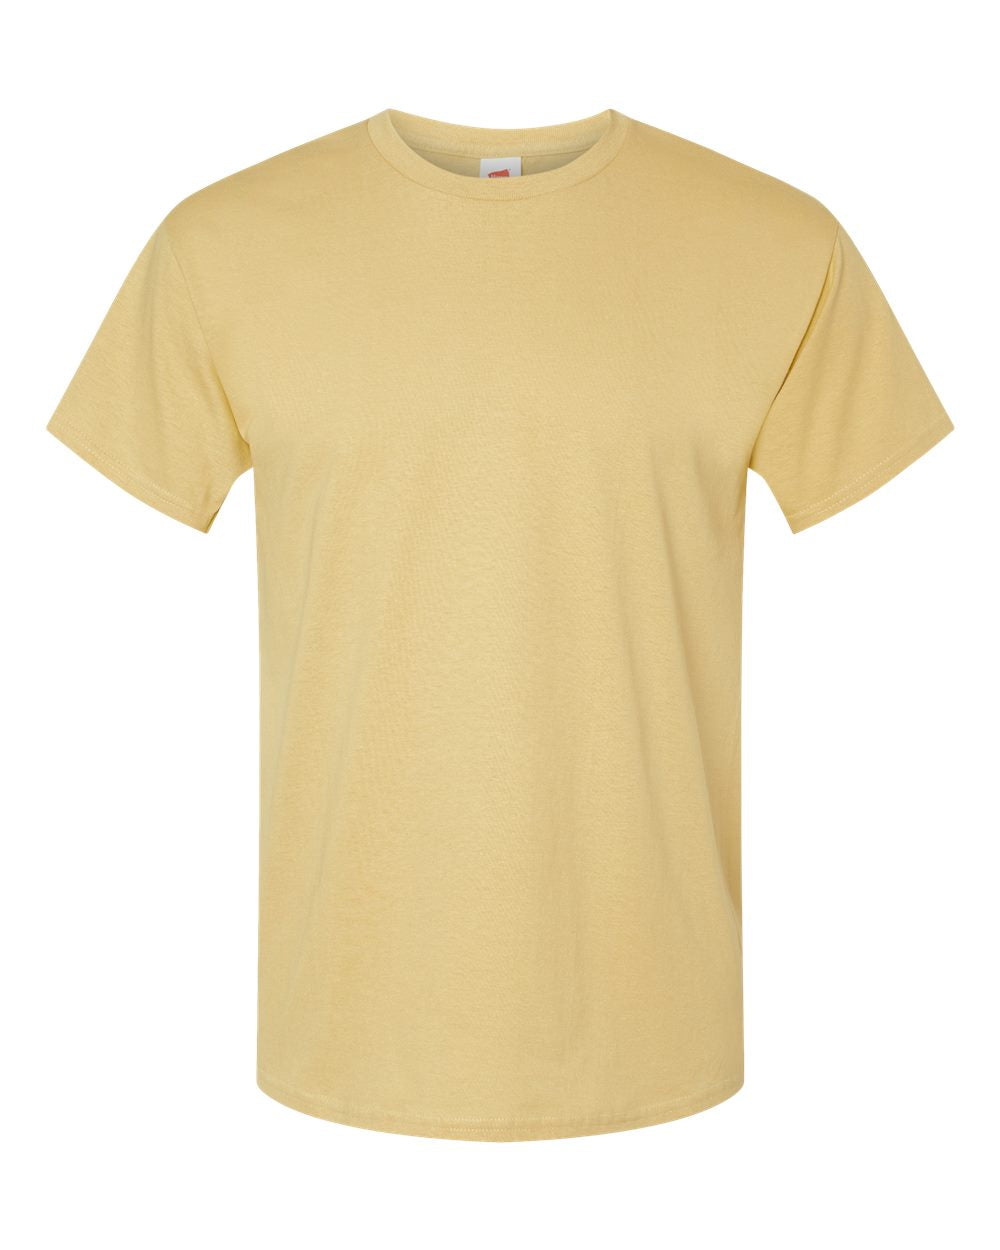 Hanes Essential-T T-Shirt